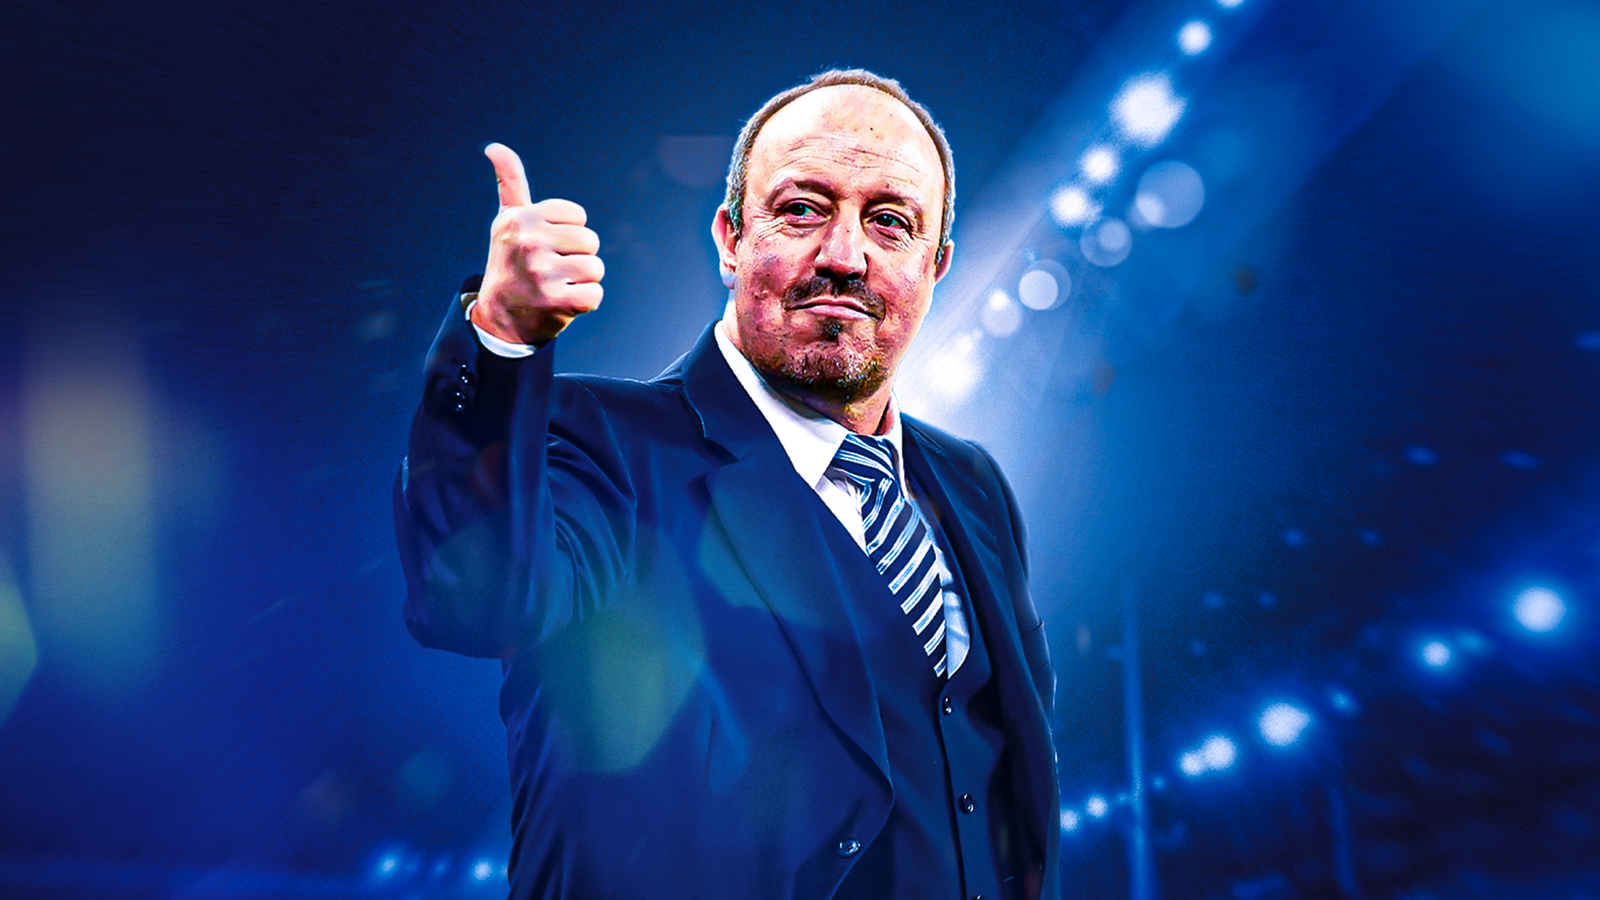 Rafael Benitez's Everton in-tray: Win over fanbase, create an identity, resolve poor home form, rebuild squad